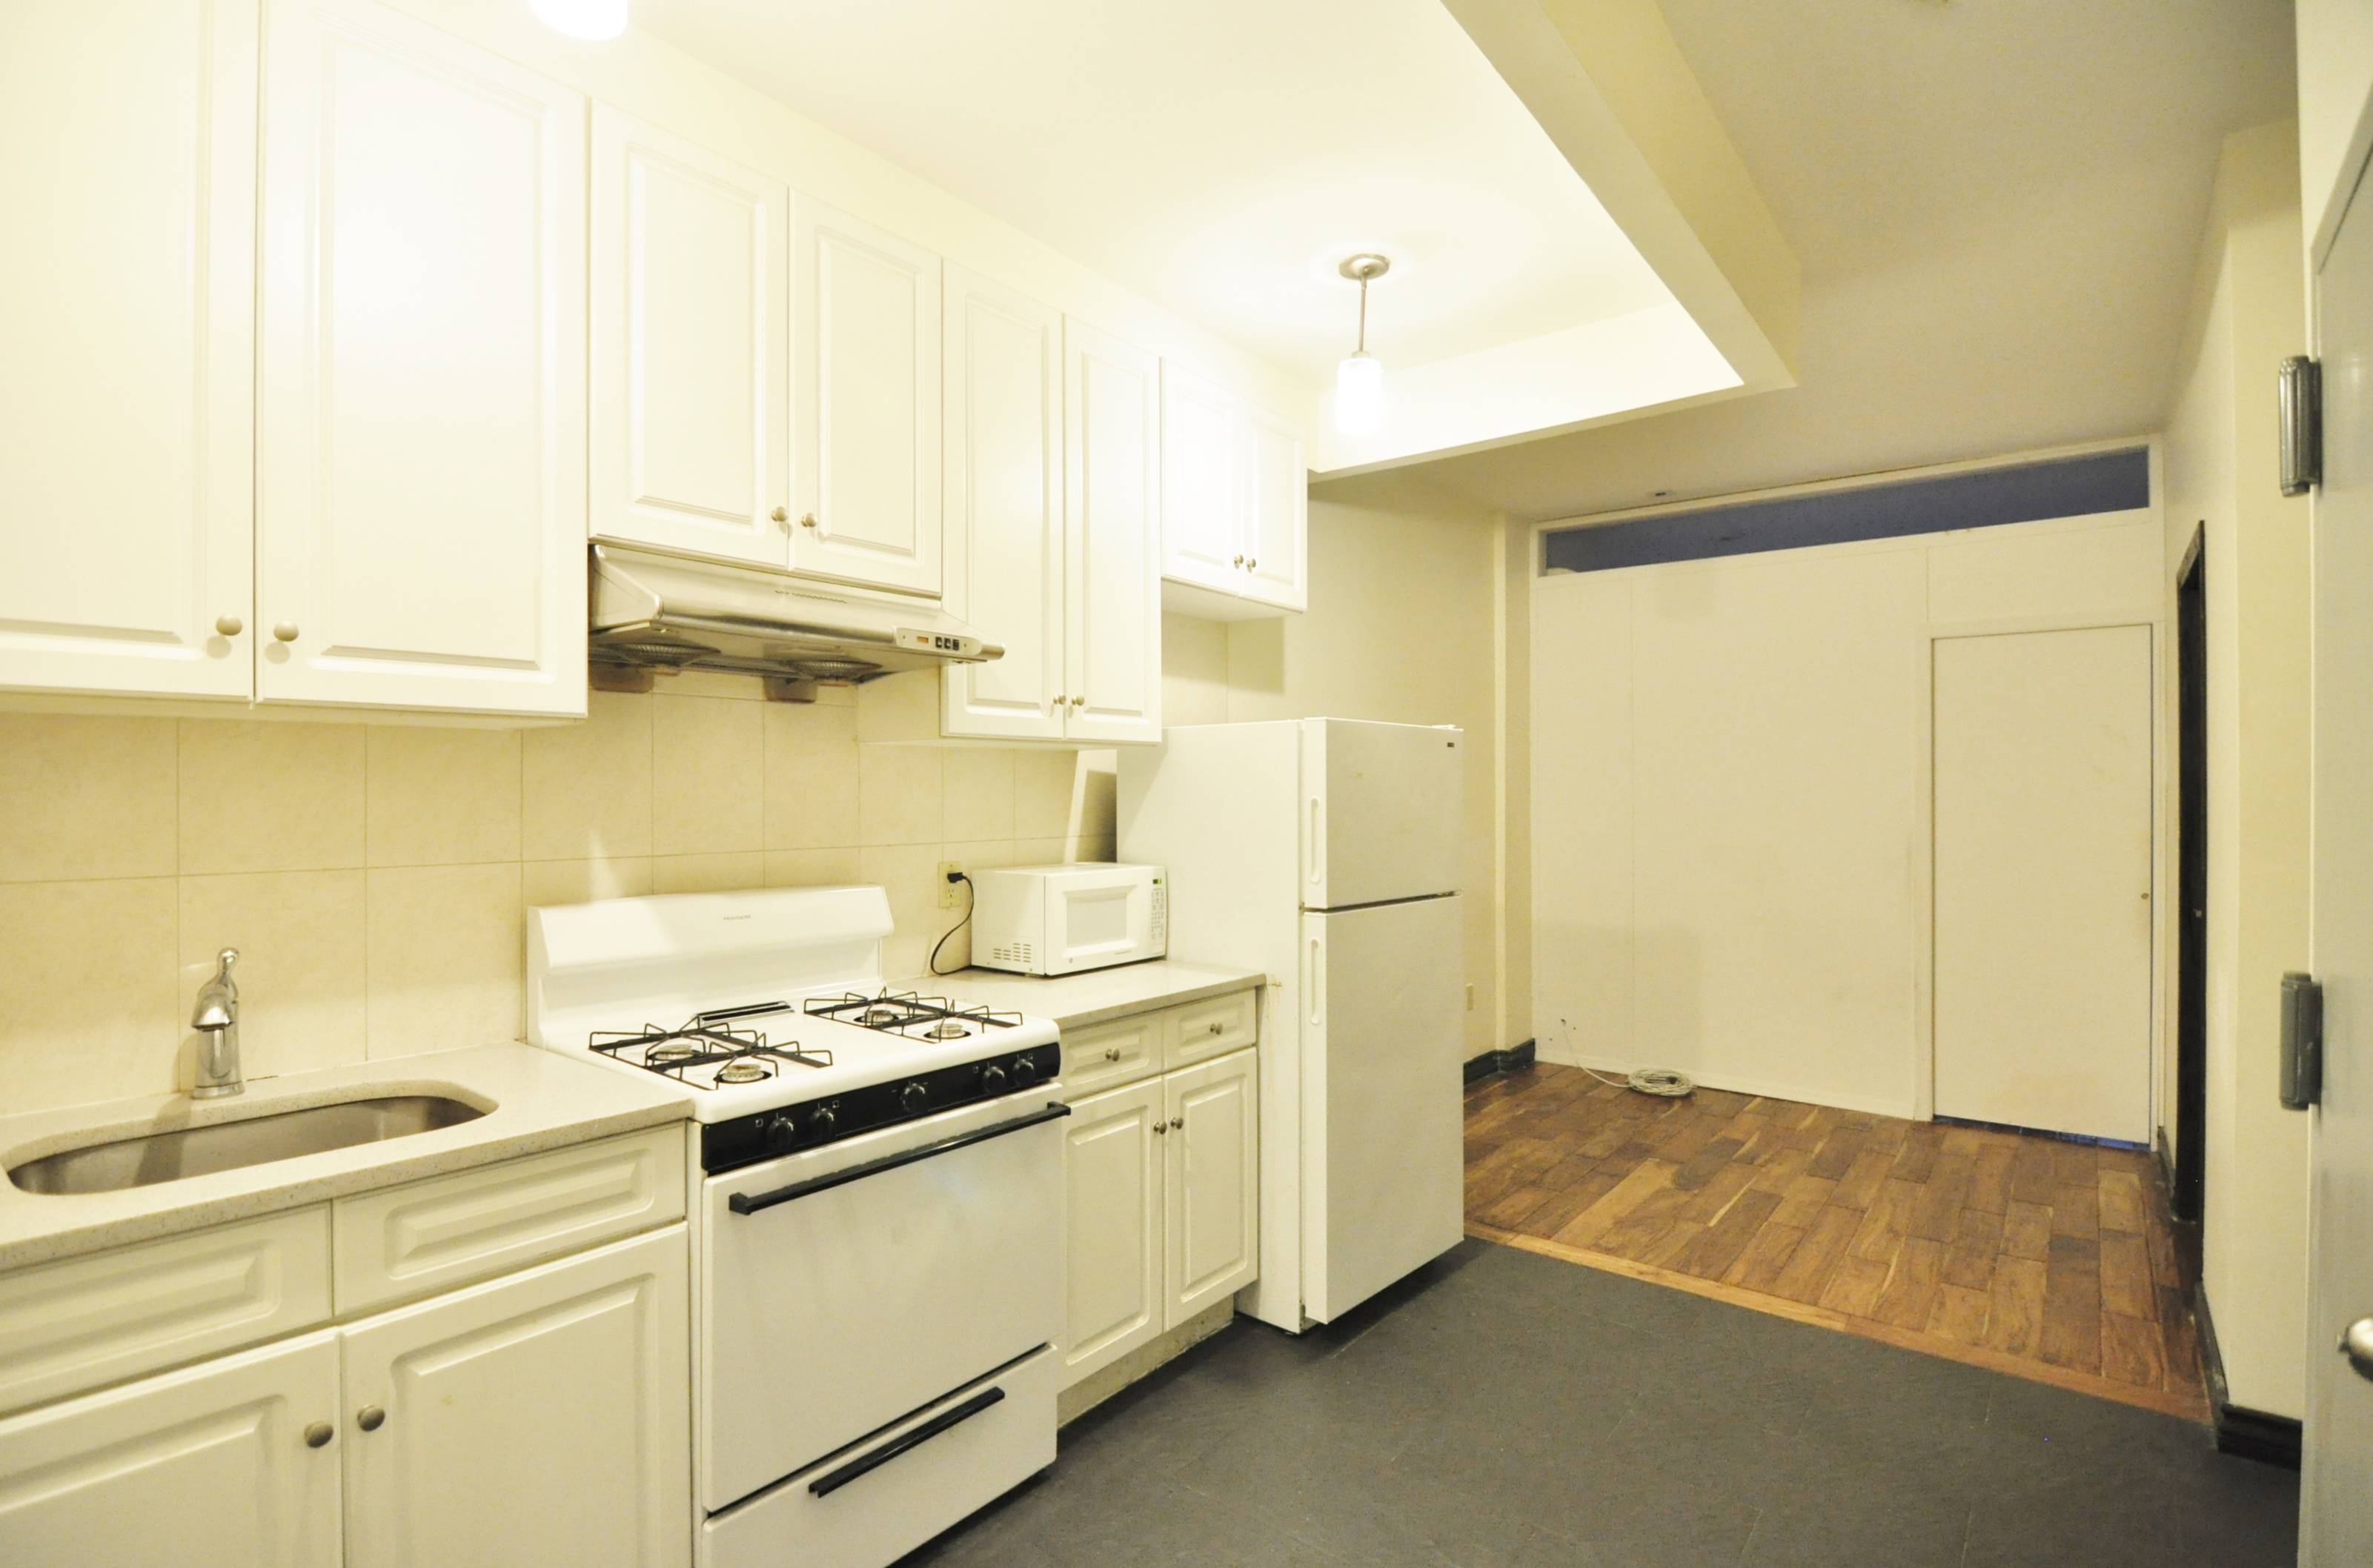 Full Floor 3 Bedroom 1 Bathroom Apartment in the heart of Upper East Side!